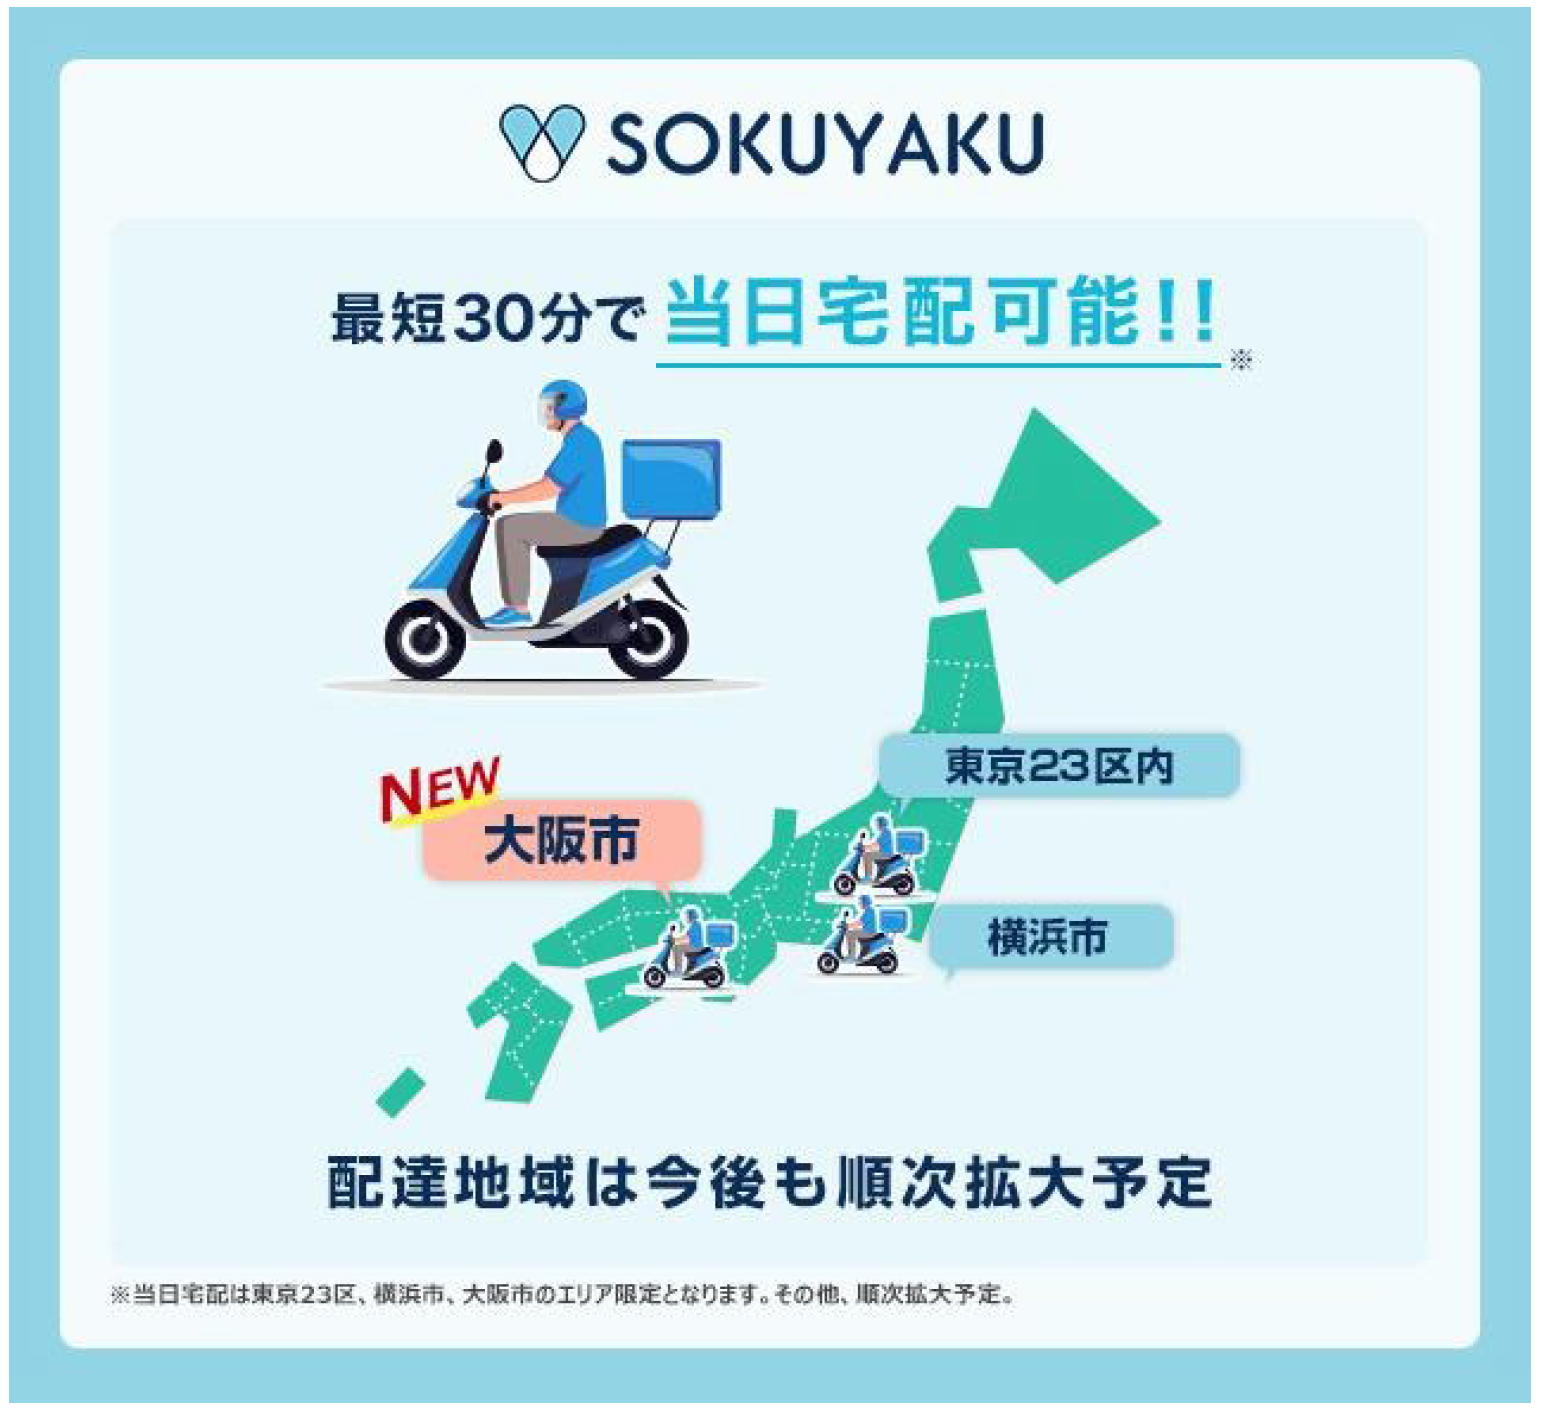 「SOKUYAKU」東京23区・横浜市内に続き、処方薬の配送網を拡大 ＜関西地方初＞大阪市内での処方薬当日配送サービス提供開始 オンライン診療/服薬指導後、当日中に処方薬をお届けのイメージ